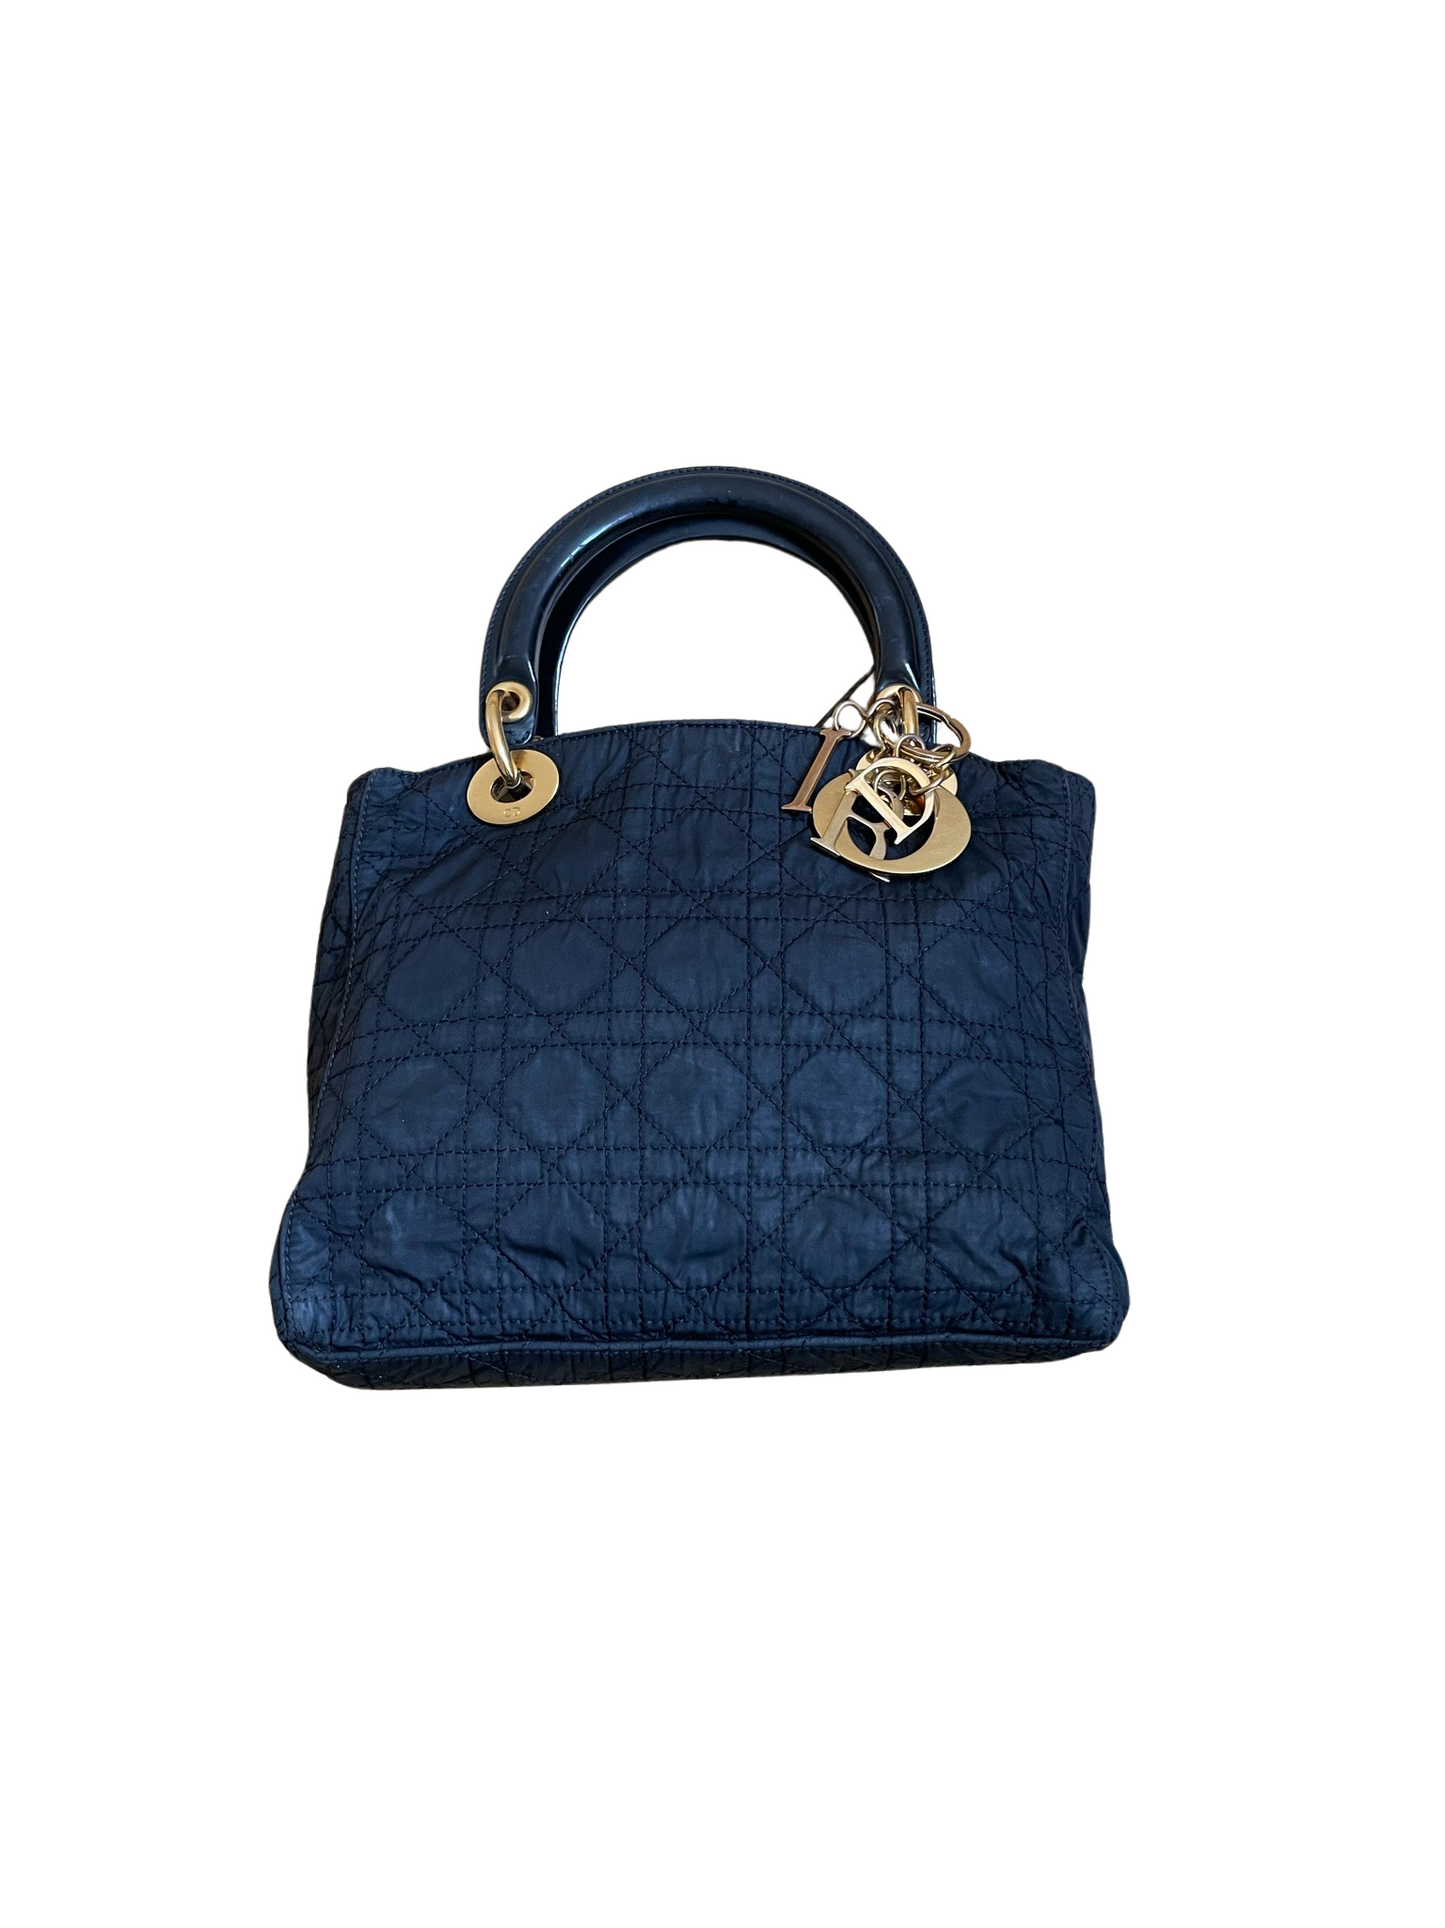 Christian Dior Lady Dior Black Nylon & Patent Leather Handbag